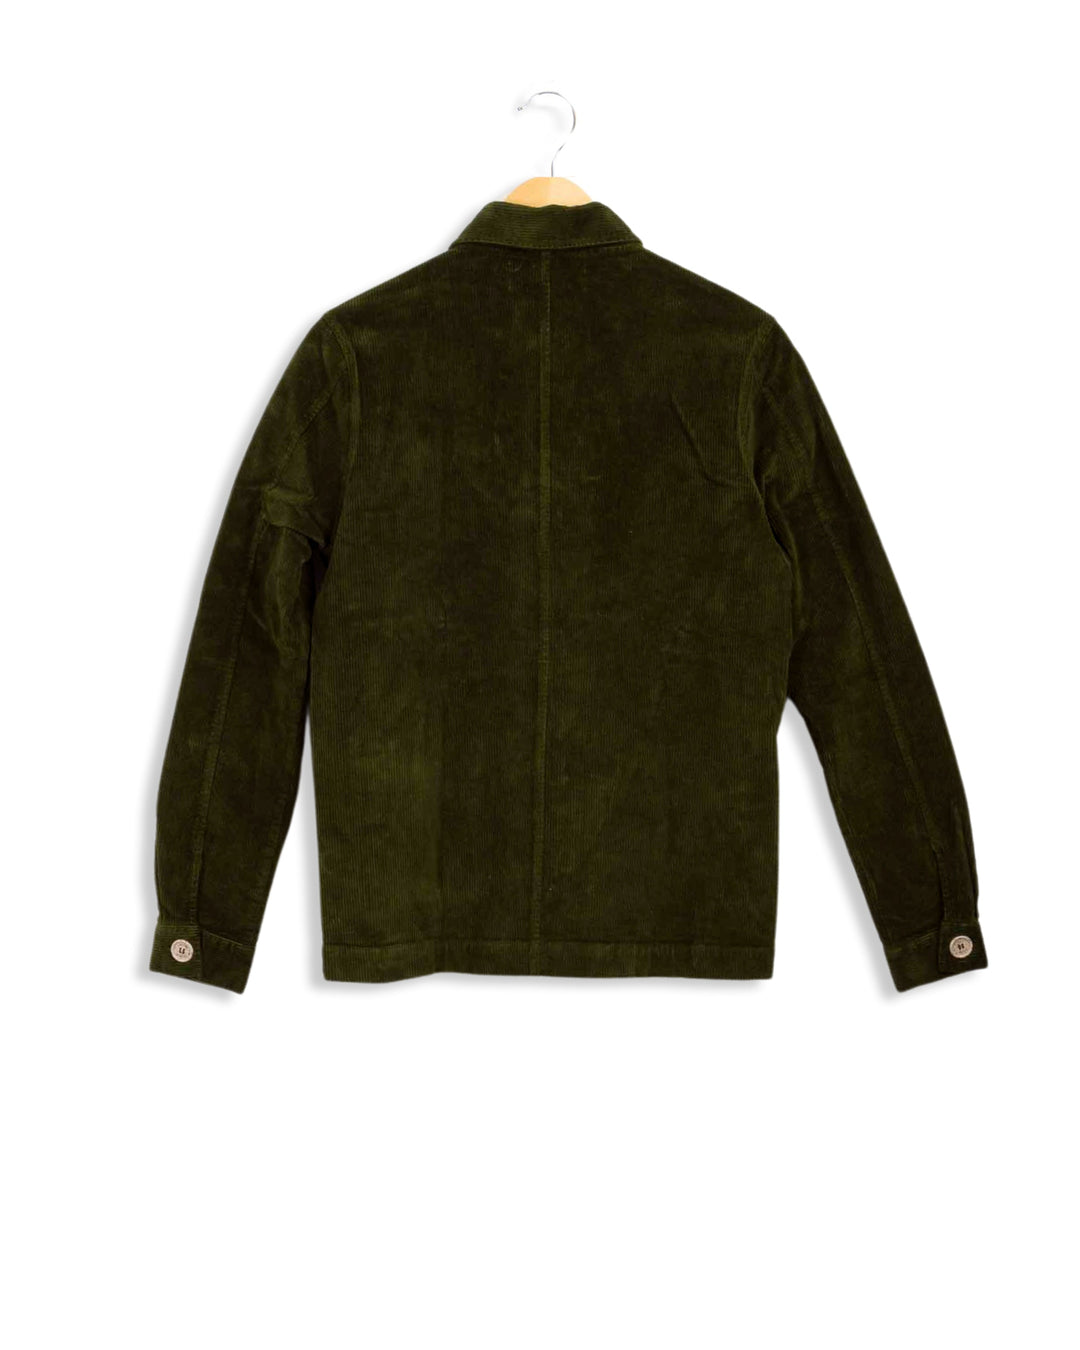 Olive Green Ribbed Paris Jacket - S